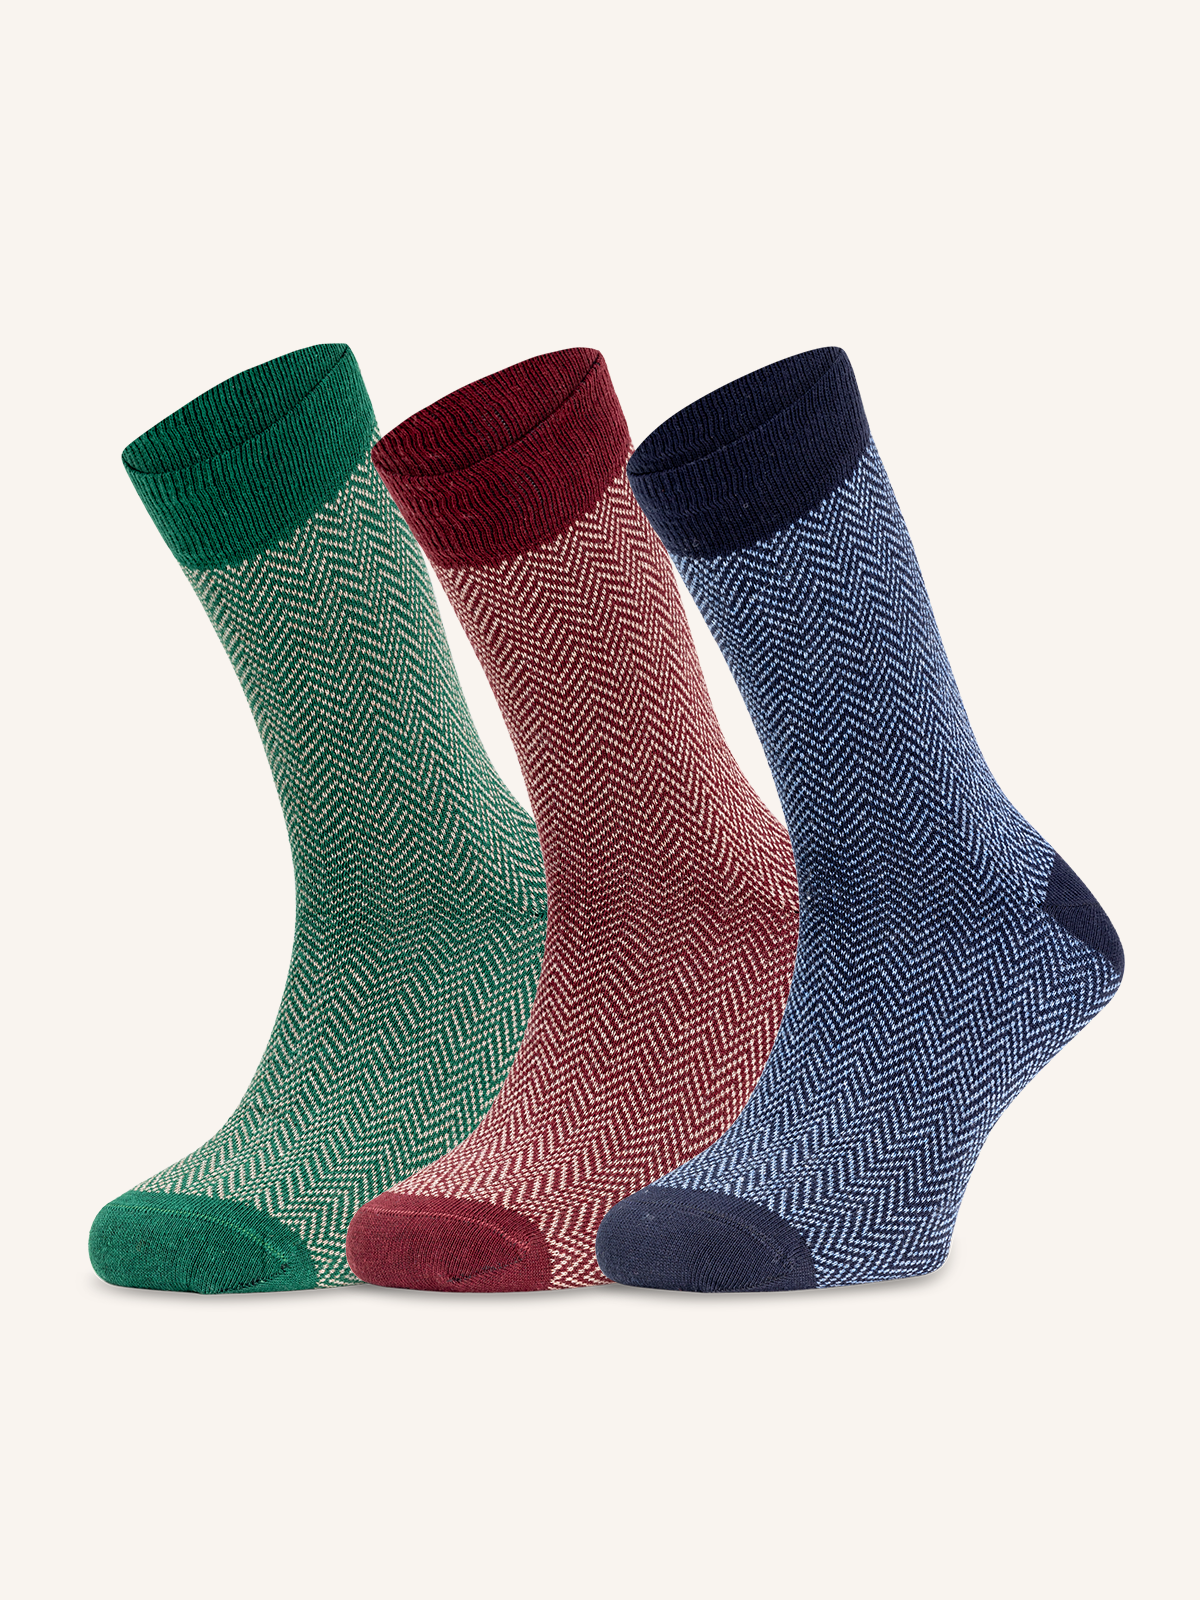 Short Socks in Jacquard Cotton for Men | Plain Color | Pack of 3 pairs | Jack C